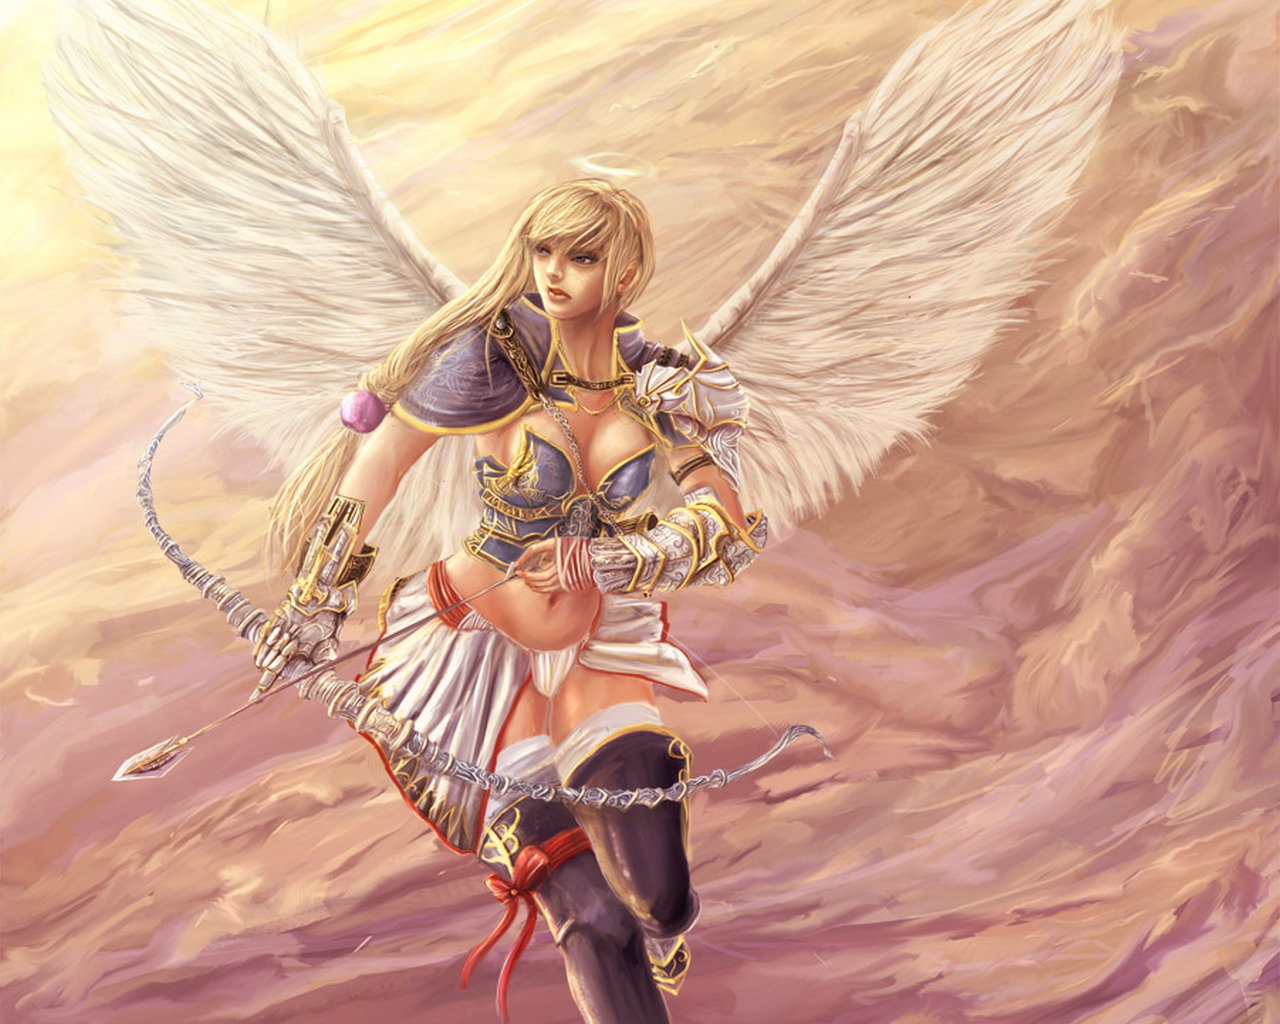 Best Angel Warrior wallpaper ID:352315 for High Resolution hd 1280x1024 PC